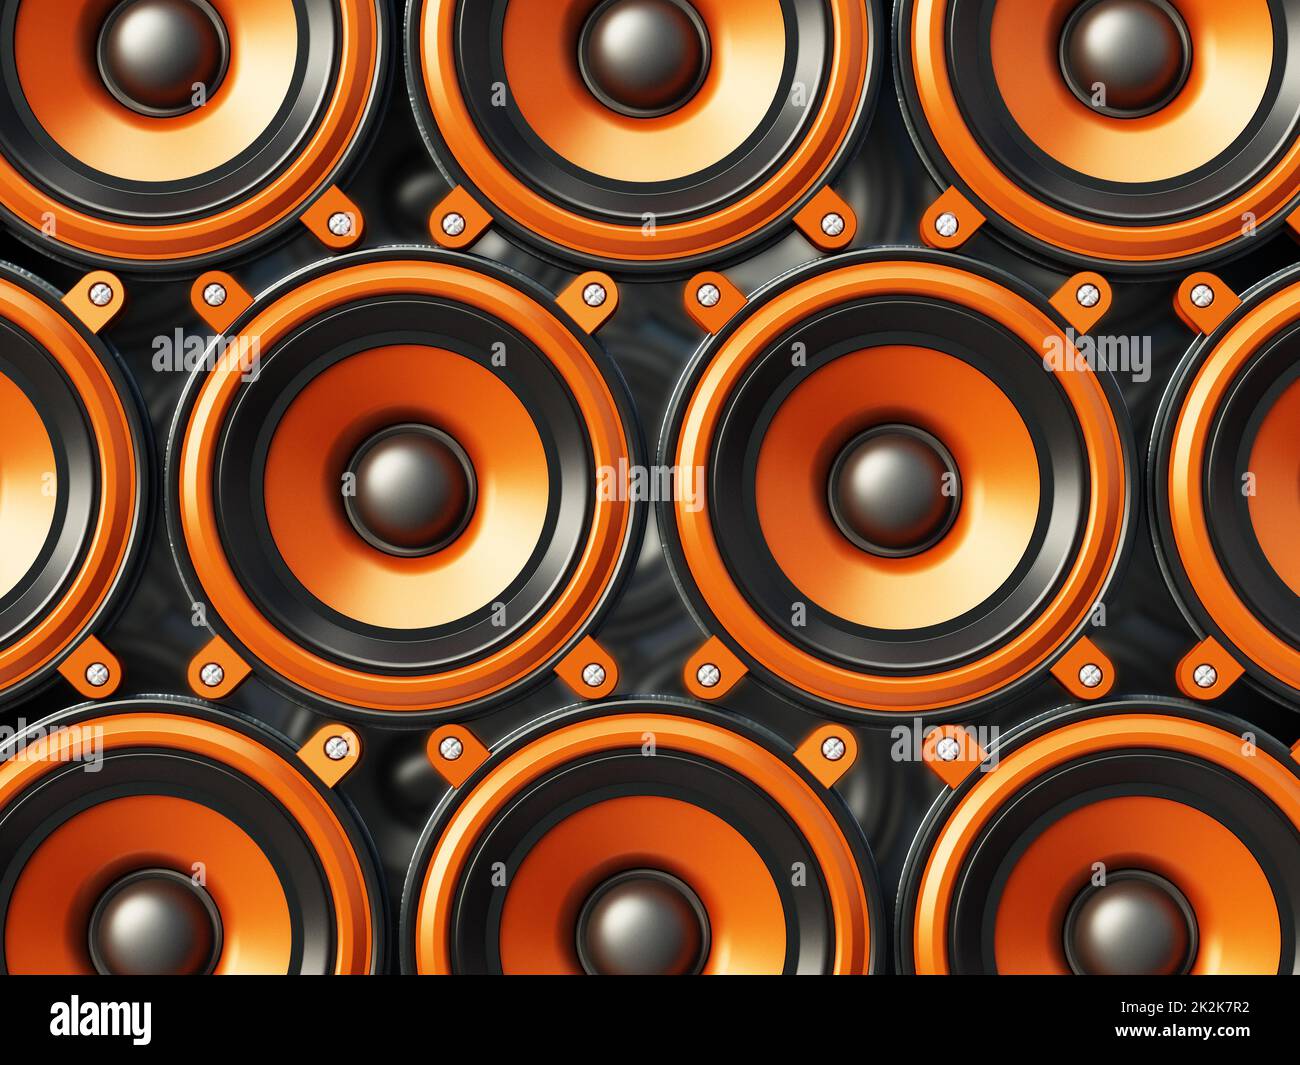 Orange and black audio speakers background. 3D illustration Stock Photo